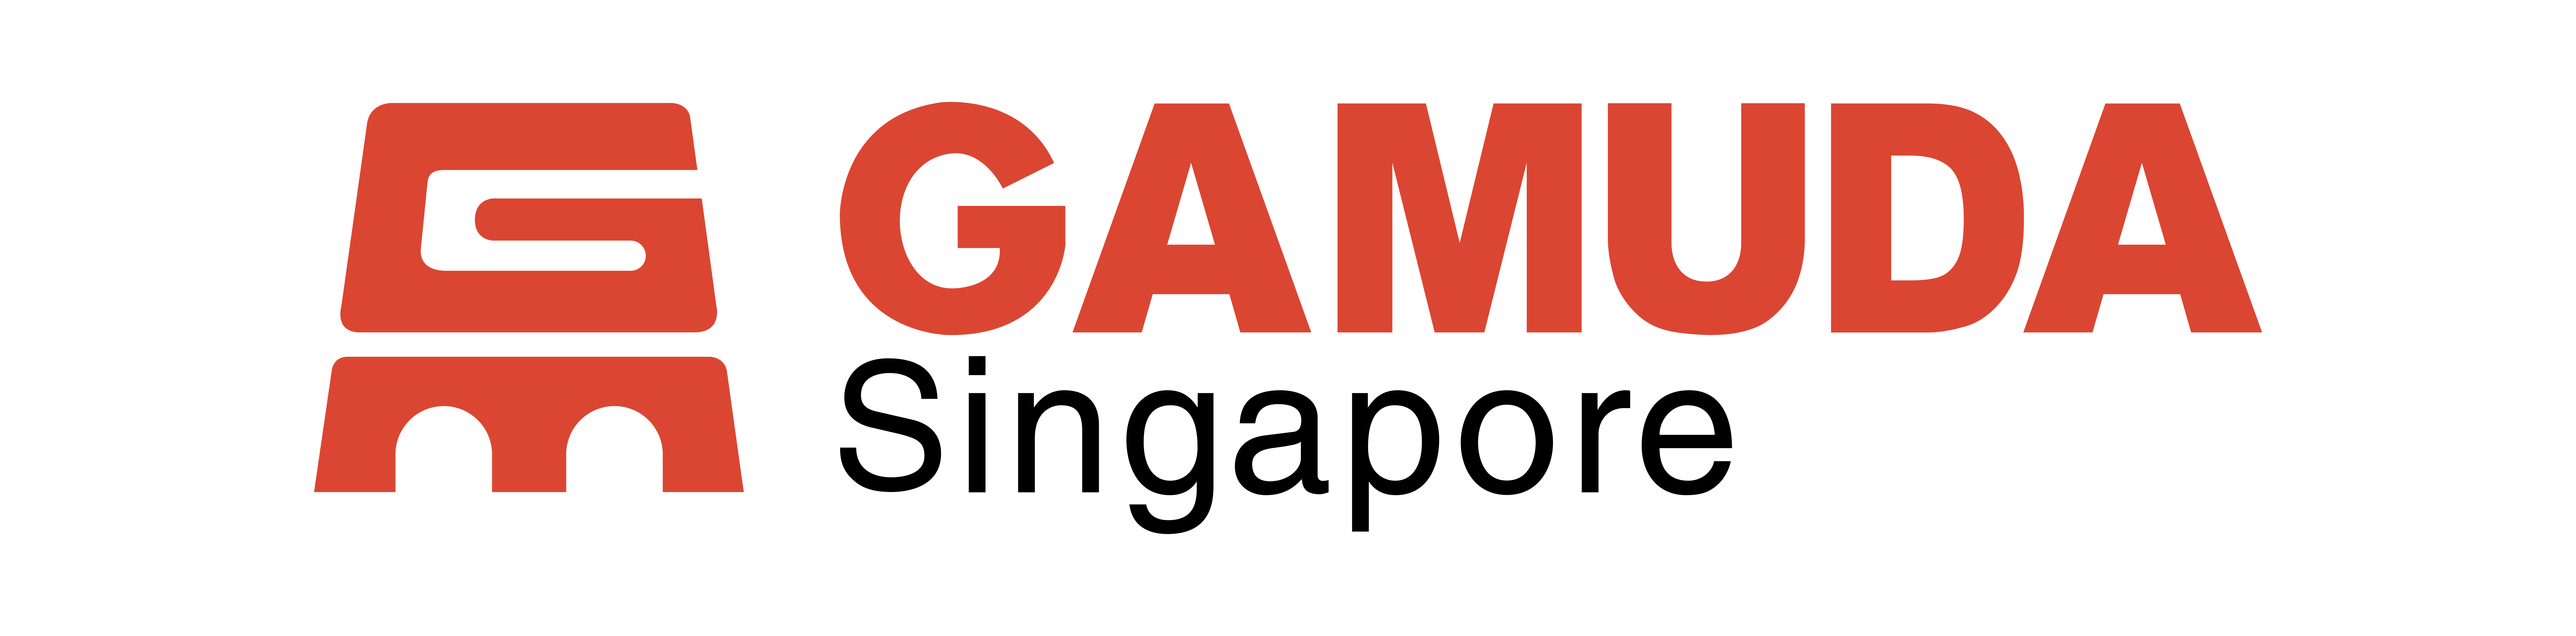 Gamuda Singapore